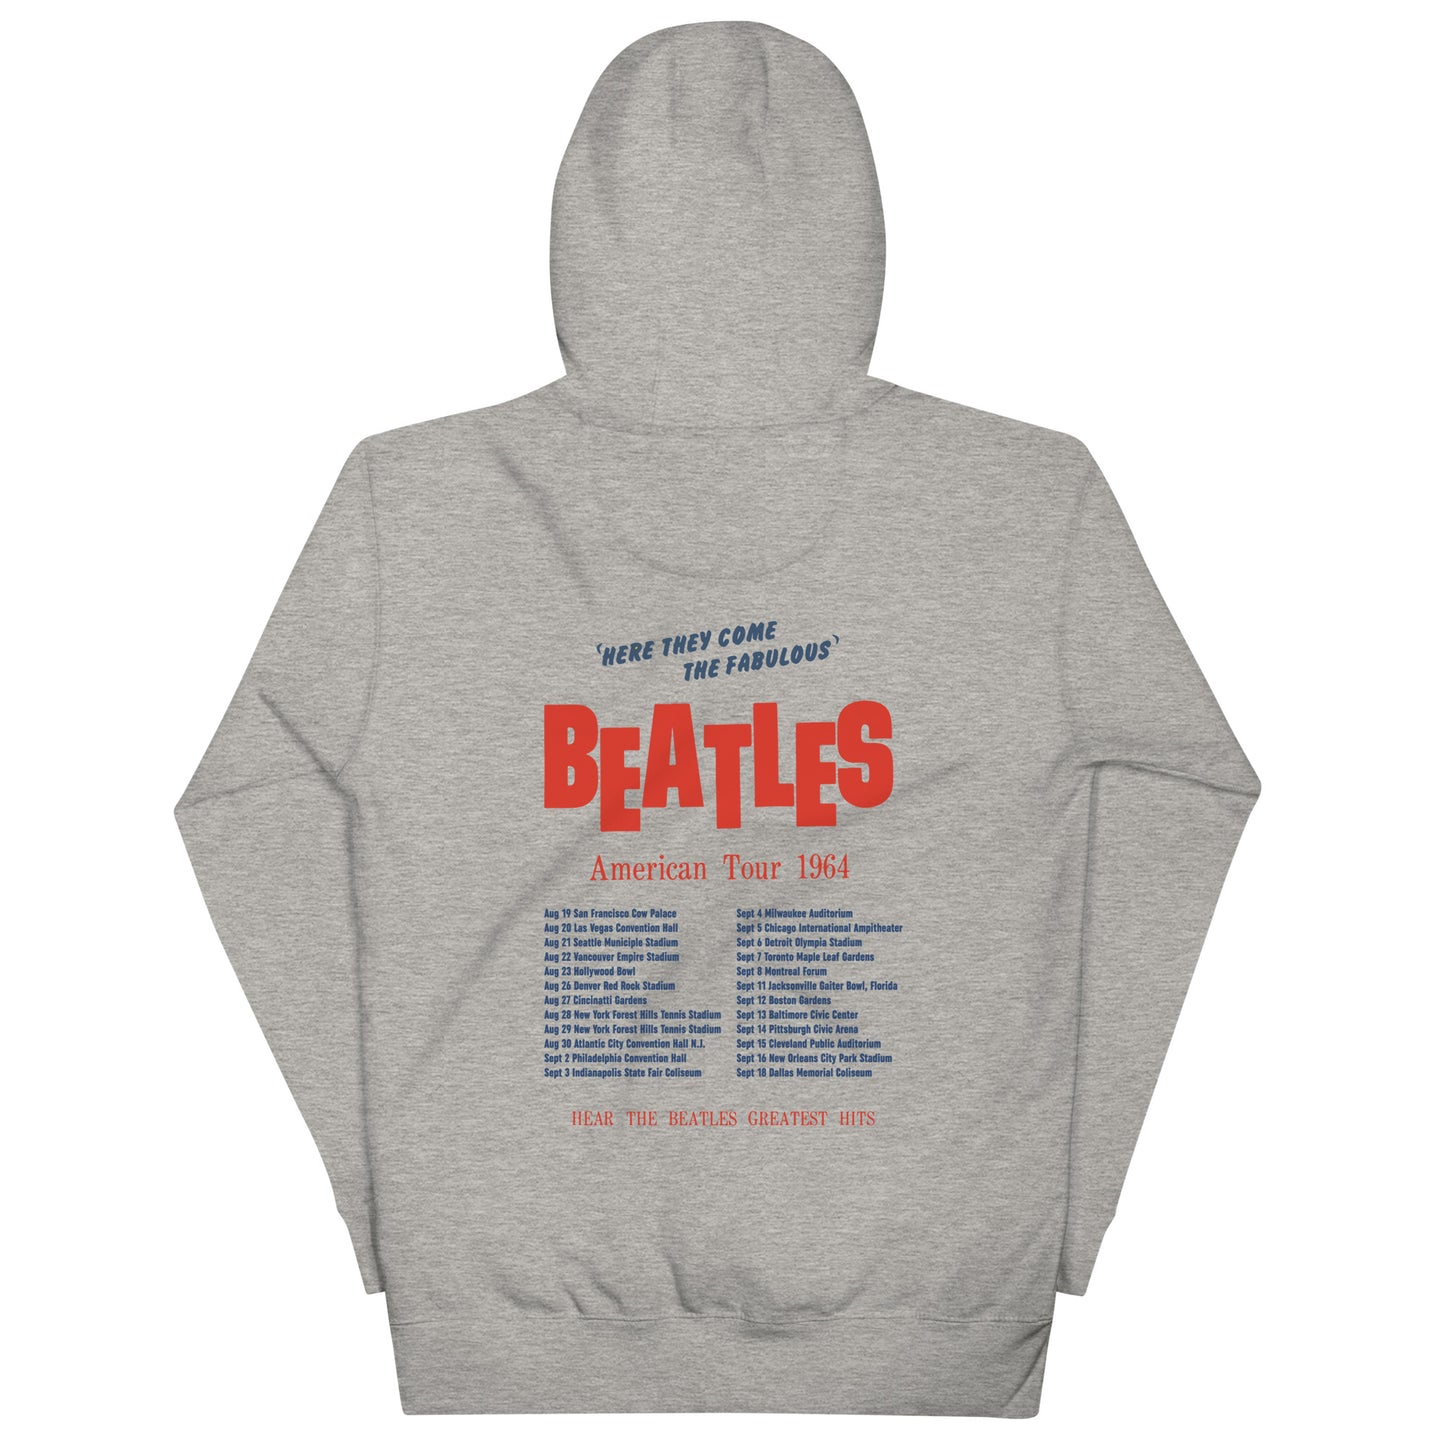 The Beatles 1964 Tour Hooded Sweatshirt